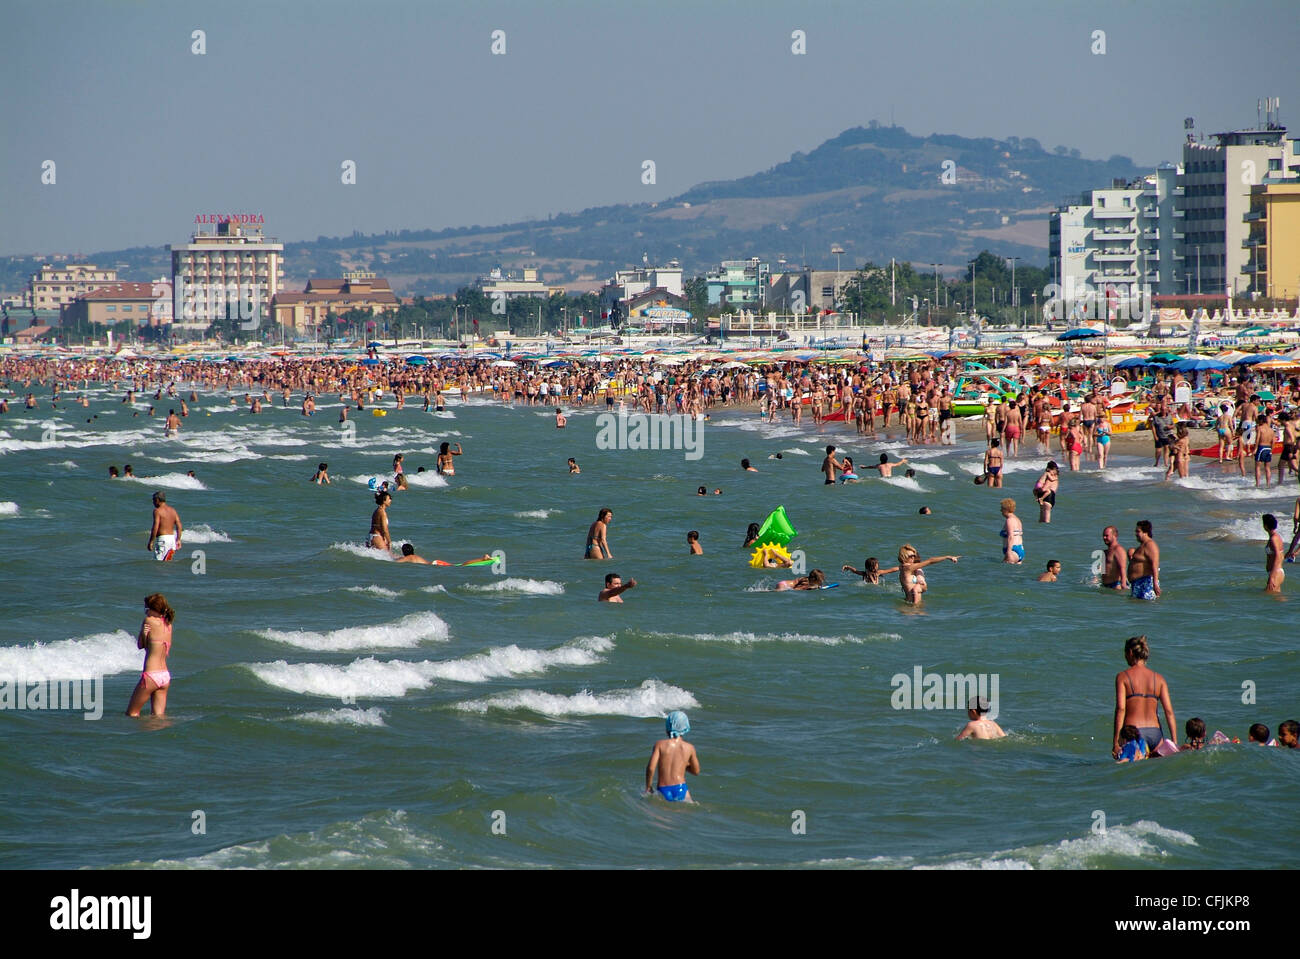 Strand von Riccione, Adria-Küste, Emilia-Romagna, Italien, Europa Stockfoto